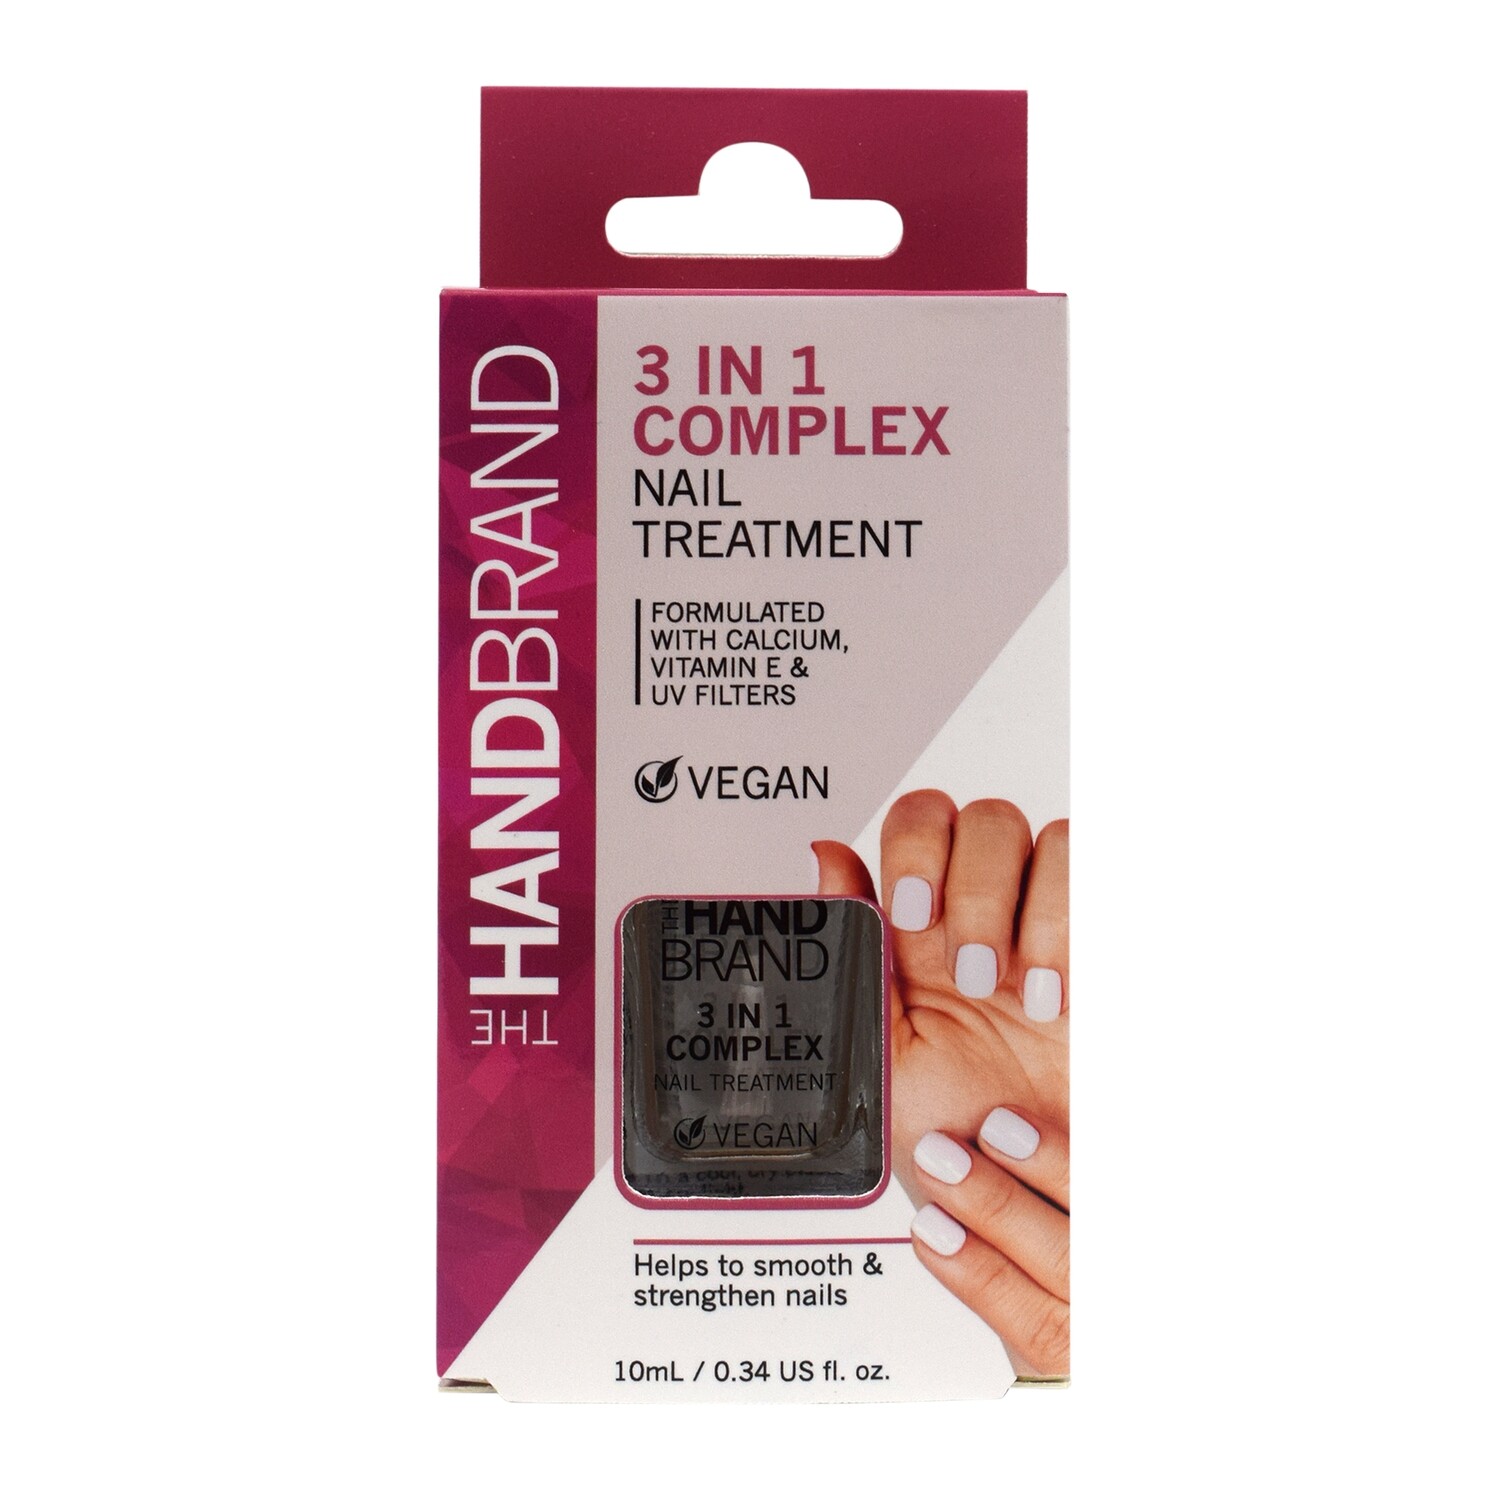 The HandBrand Nail Treatment - 3 in 1 Complex VEGAN, 10 ml